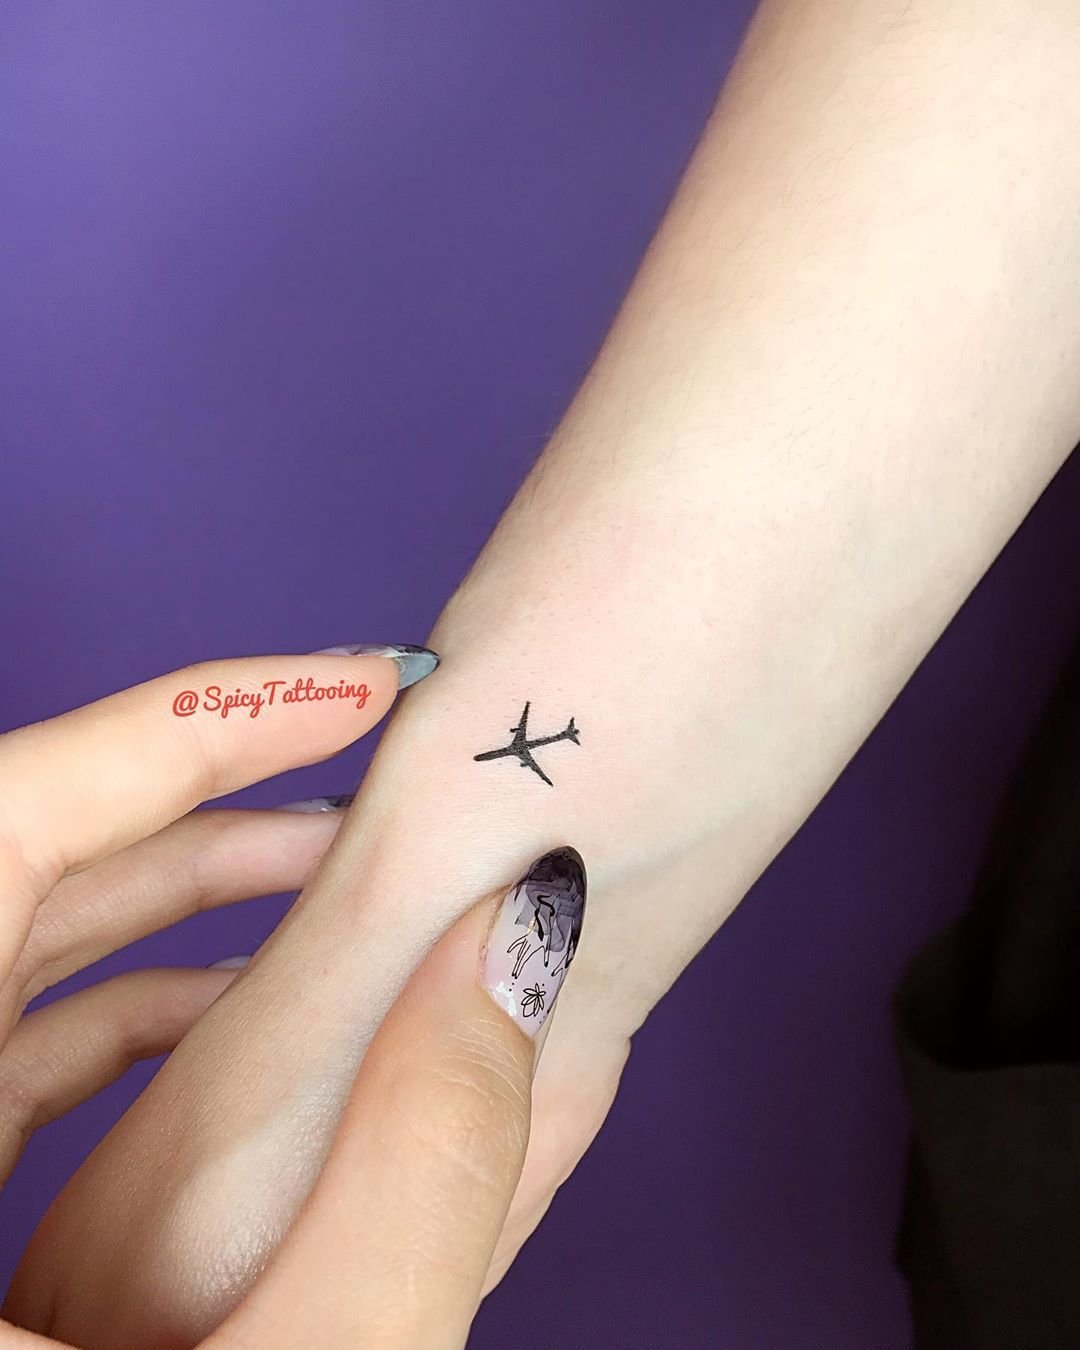 14. Airplane tattoo